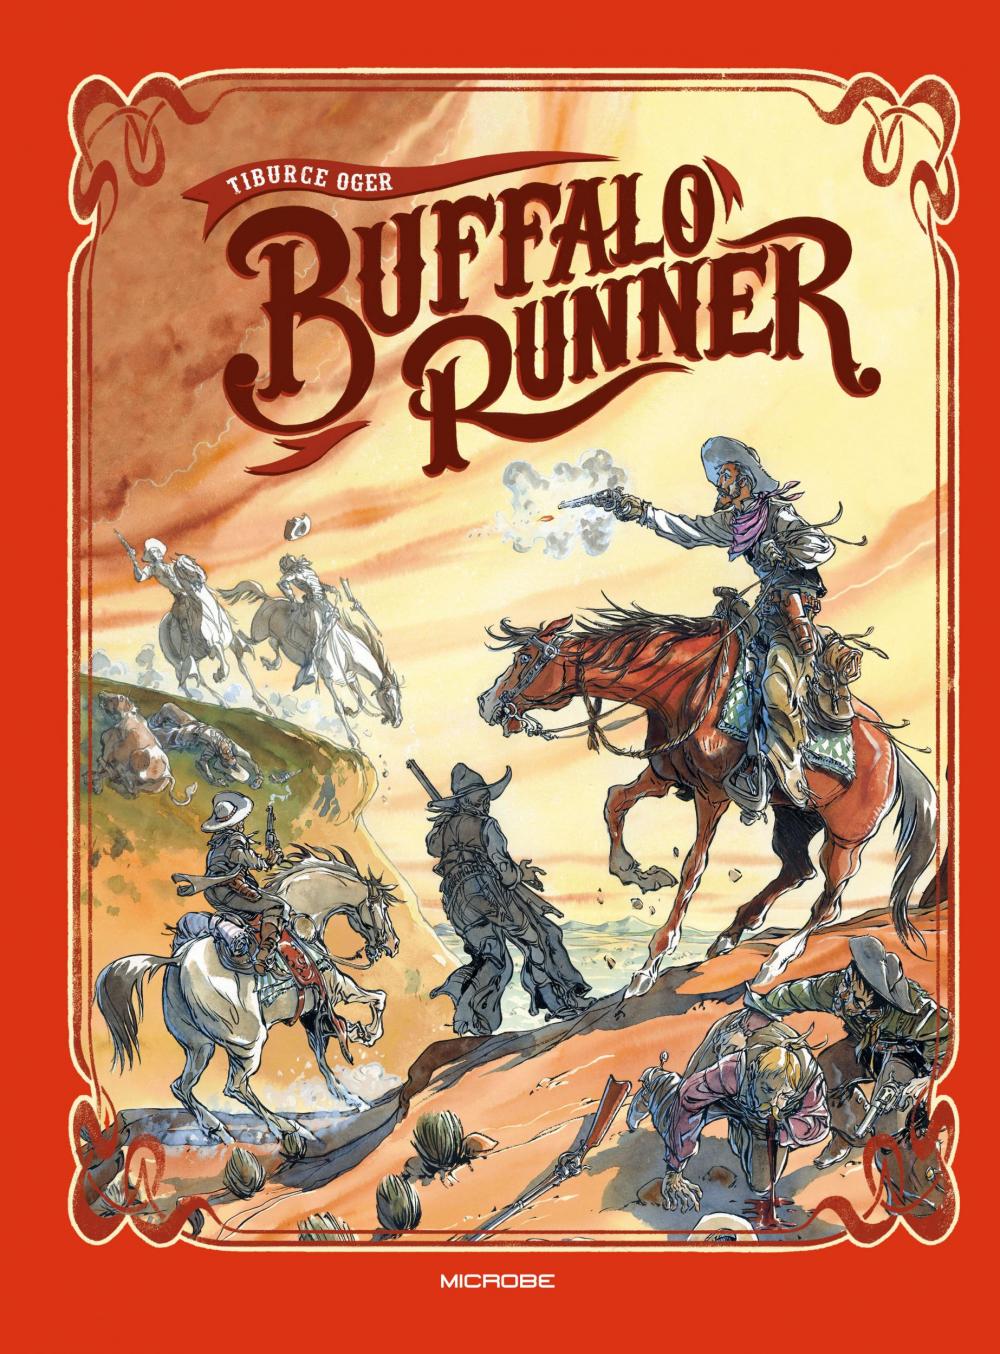 Buffalo Runner - Red cover - Microbe